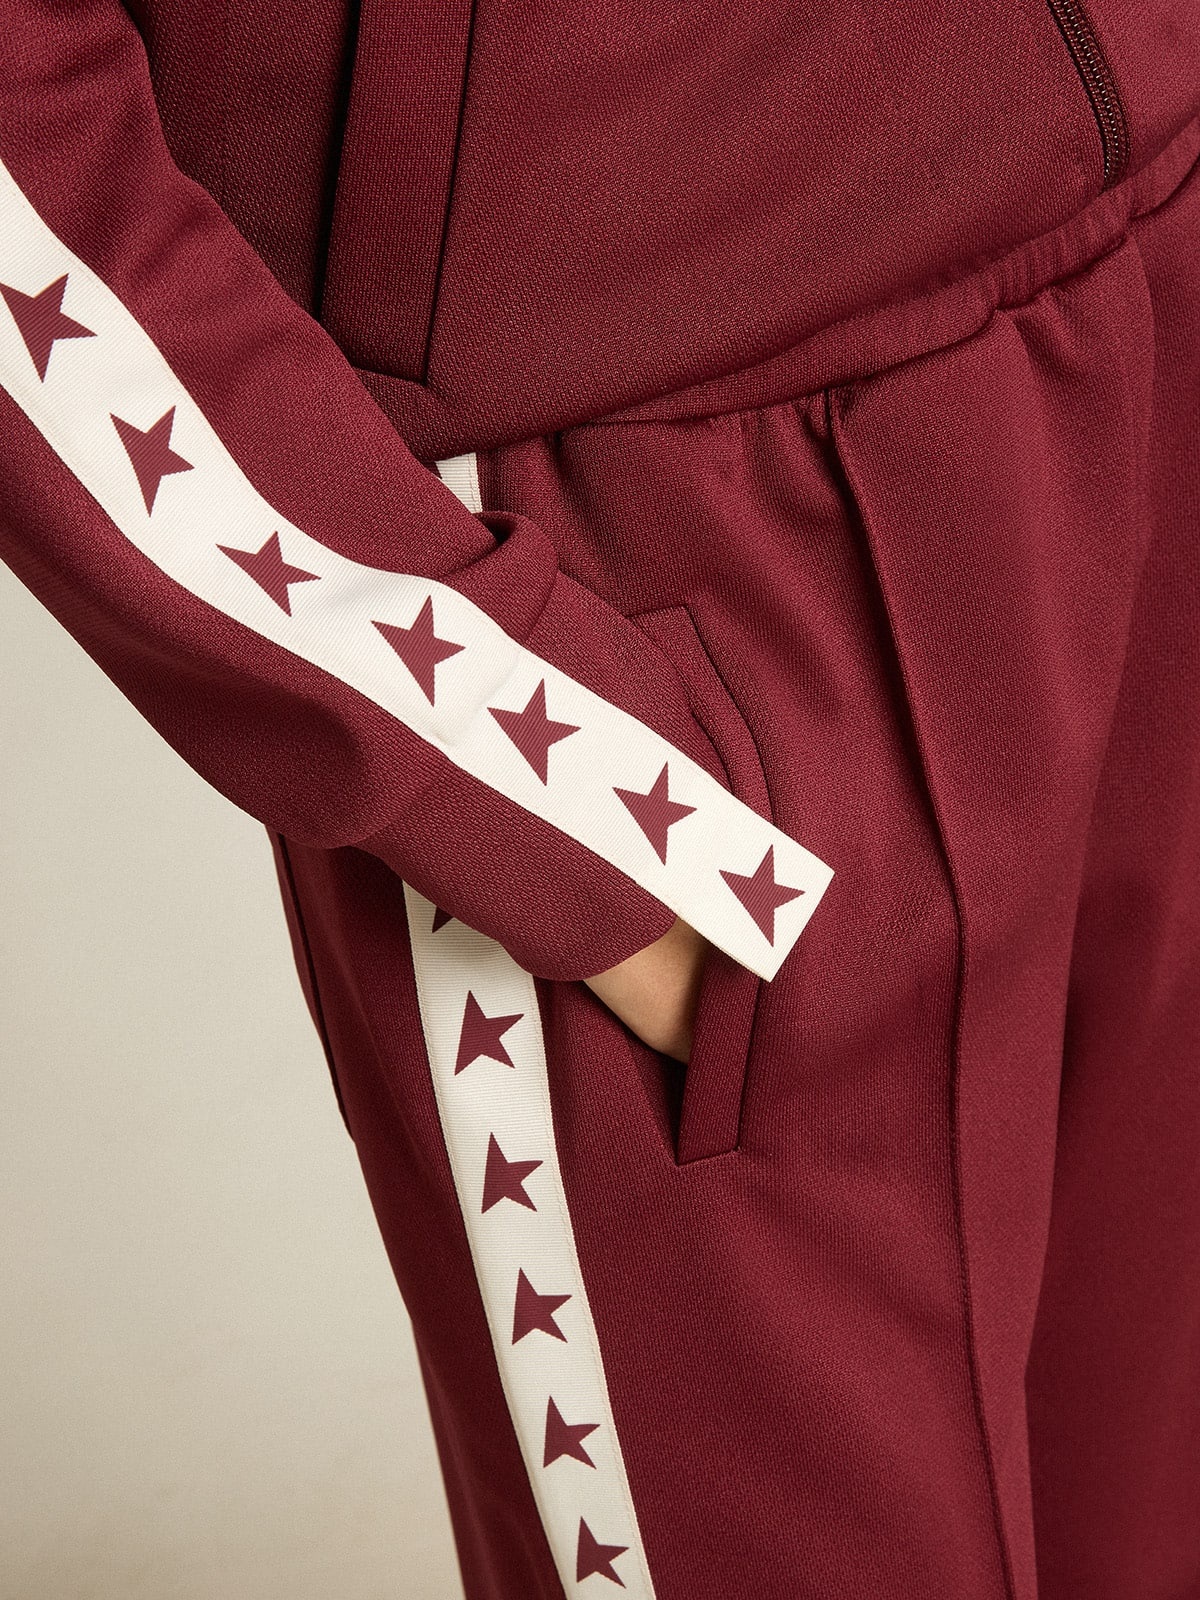 Women’s burgundy zipped sweatshirt with white strip and contrasting stars - 5